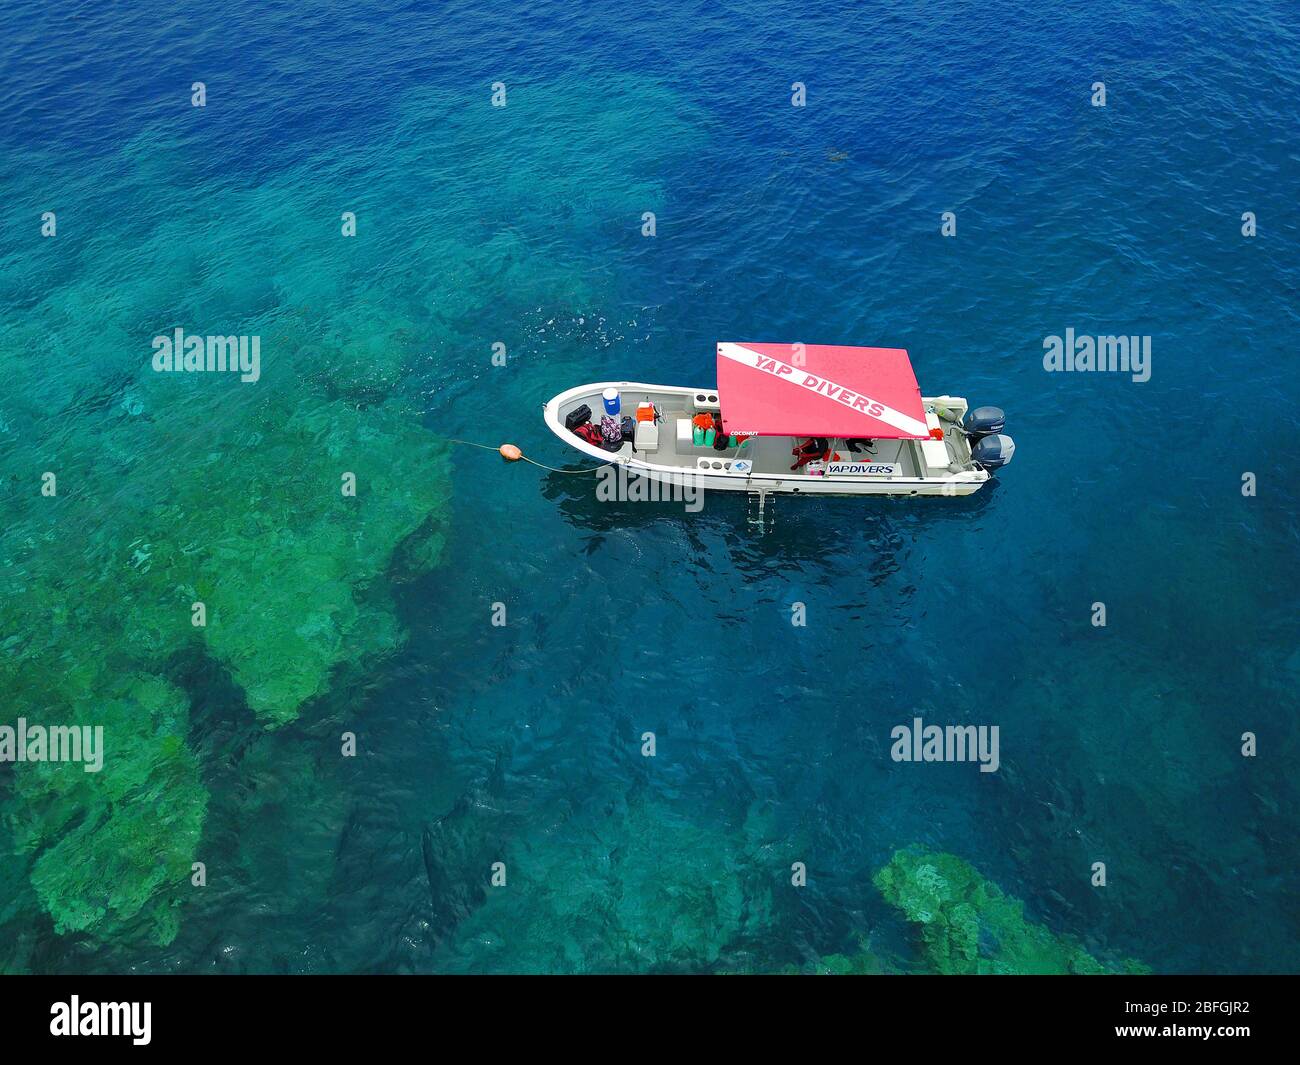 Tauchschiff ankert an Riff, Insel Yap, Südsee, Pazifik Foto Stock